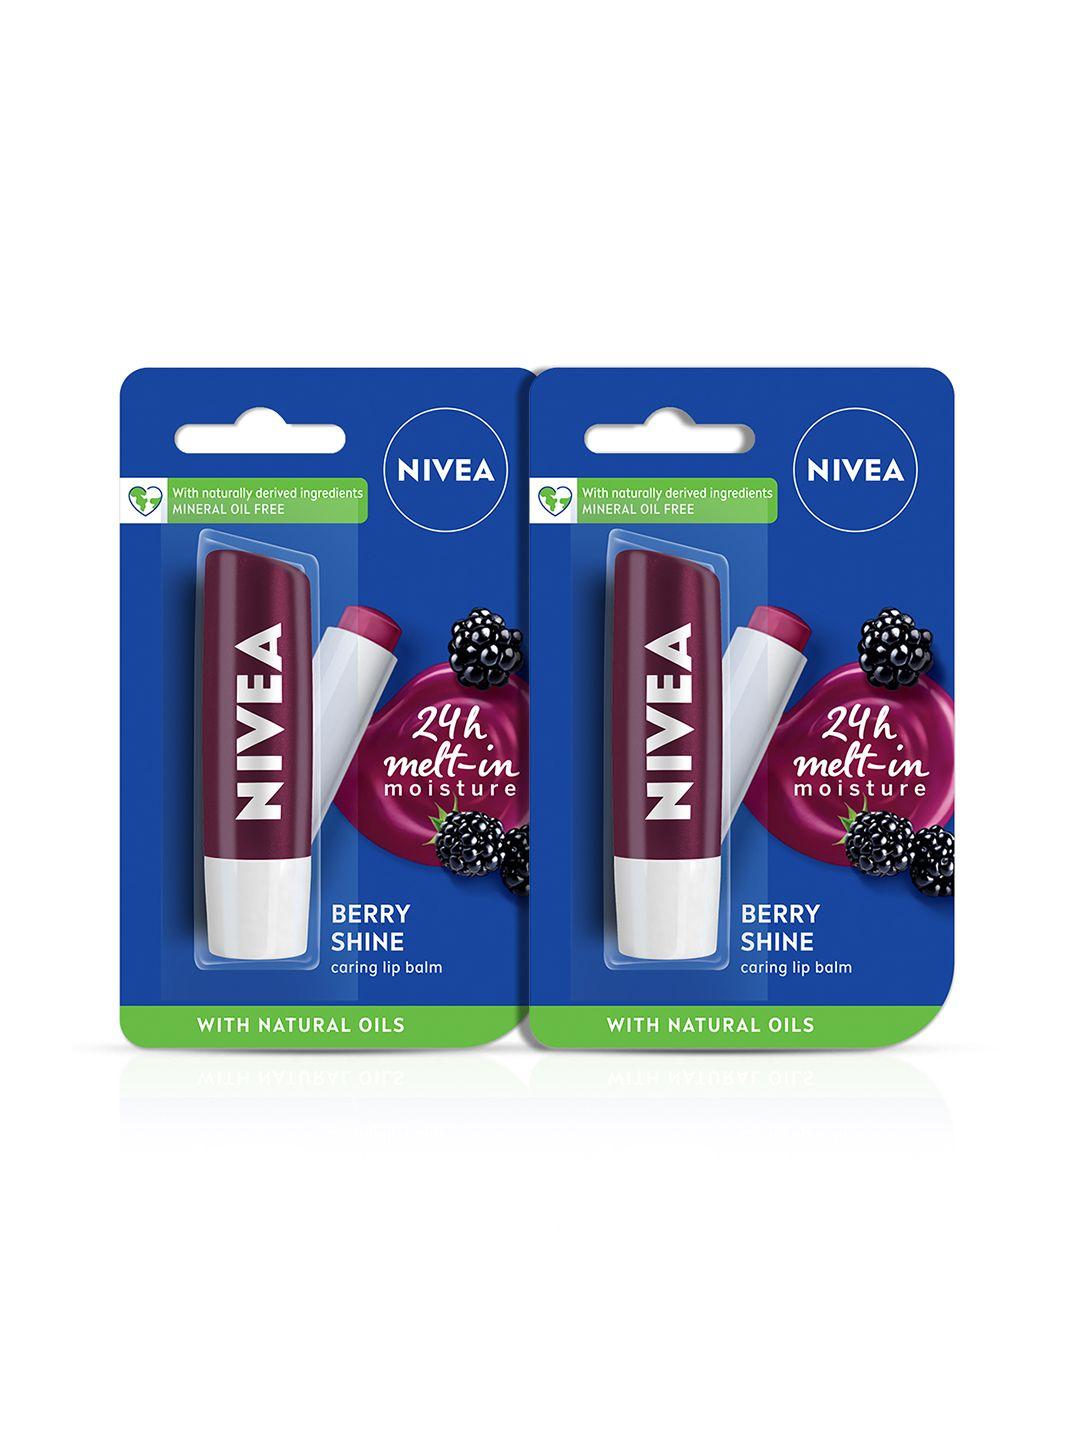 nivea set of 2 berry shine 24h melt-in moisture lip balms